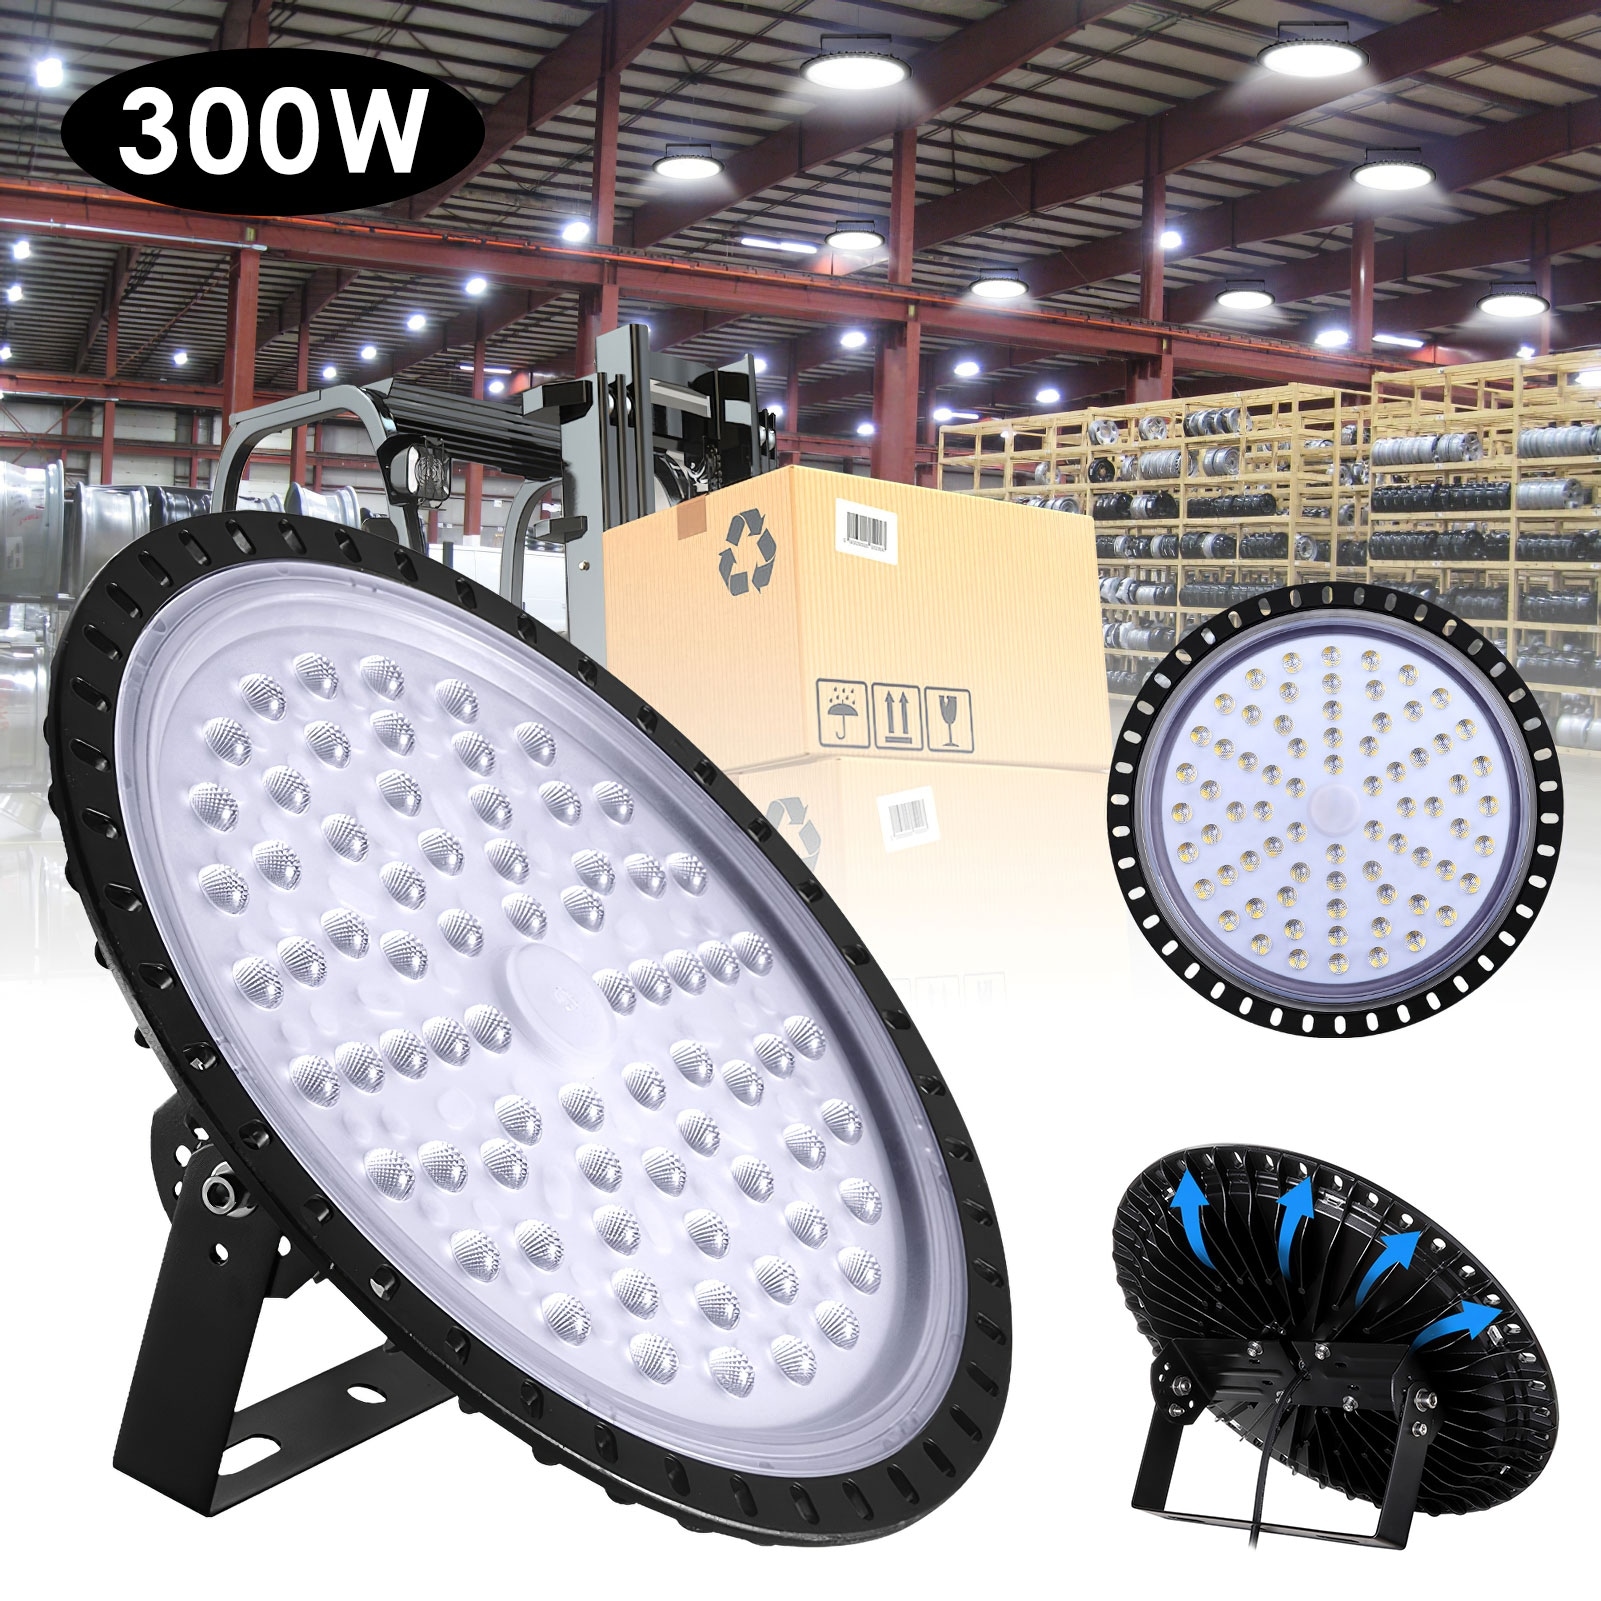 50W-500Watt UFO LED High Low Bay Light Factory Warehouse Shop Gym Lighting Lamps